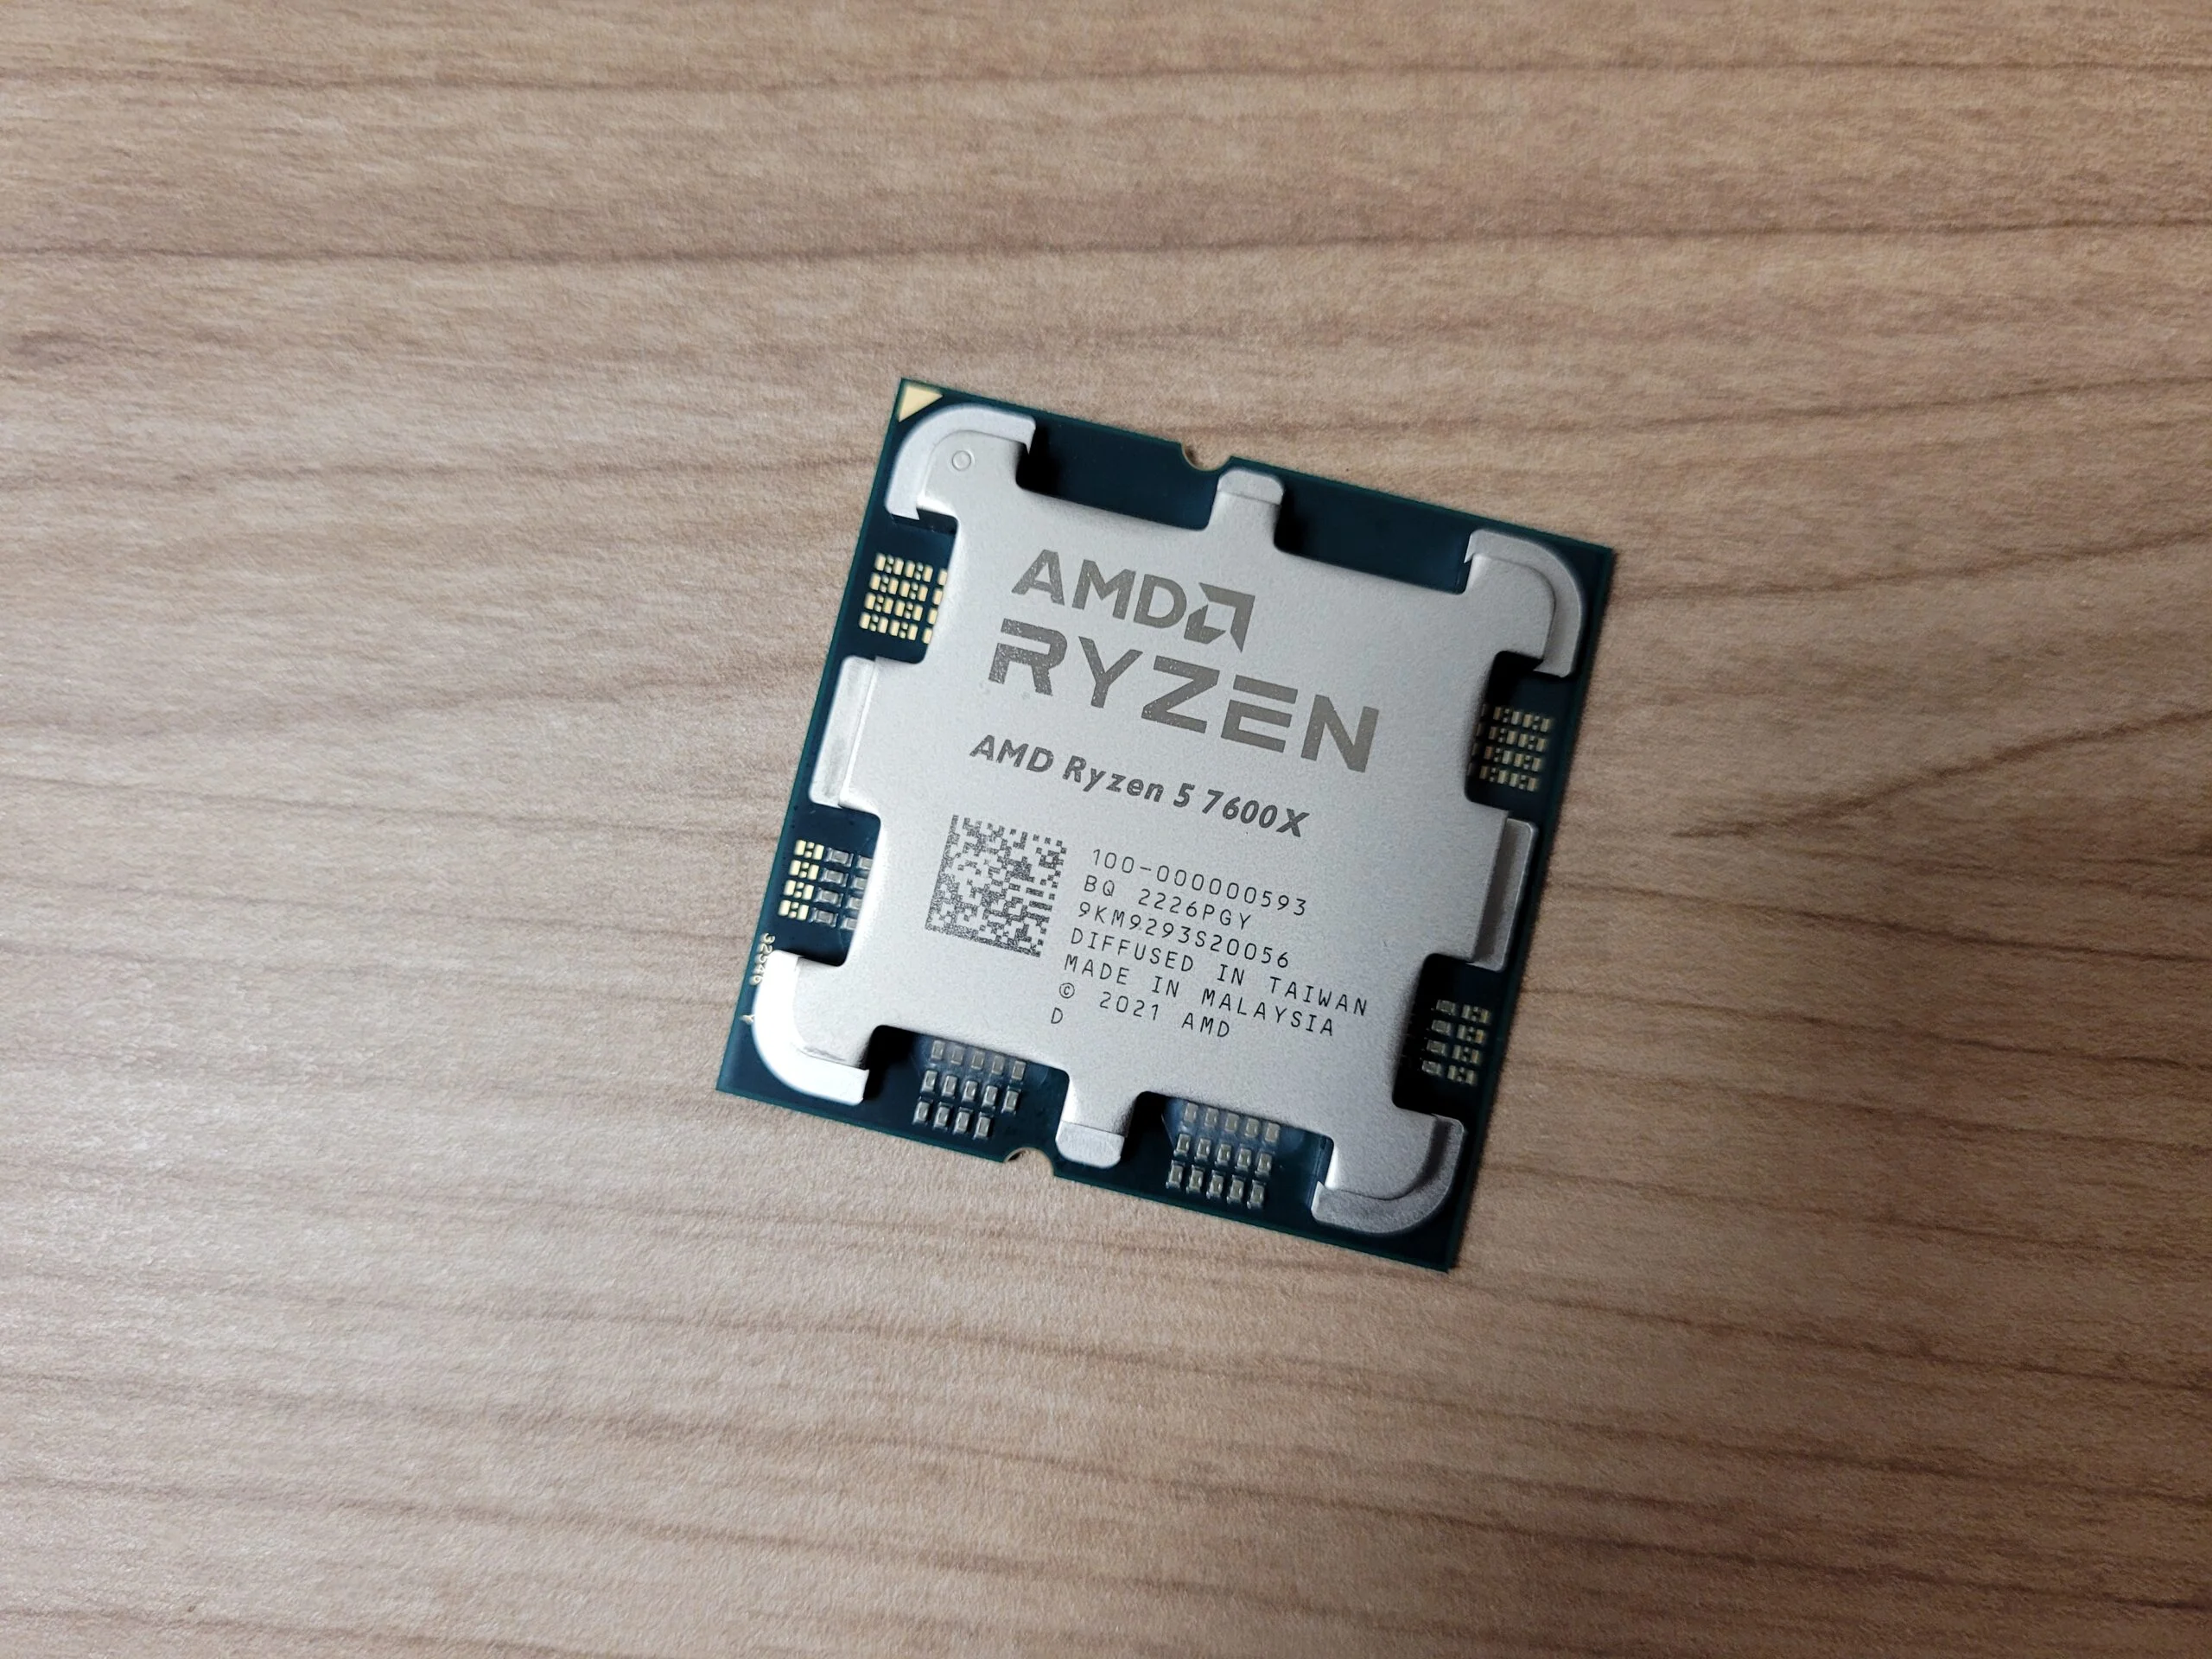 AMD's Ryzen 5 7600X